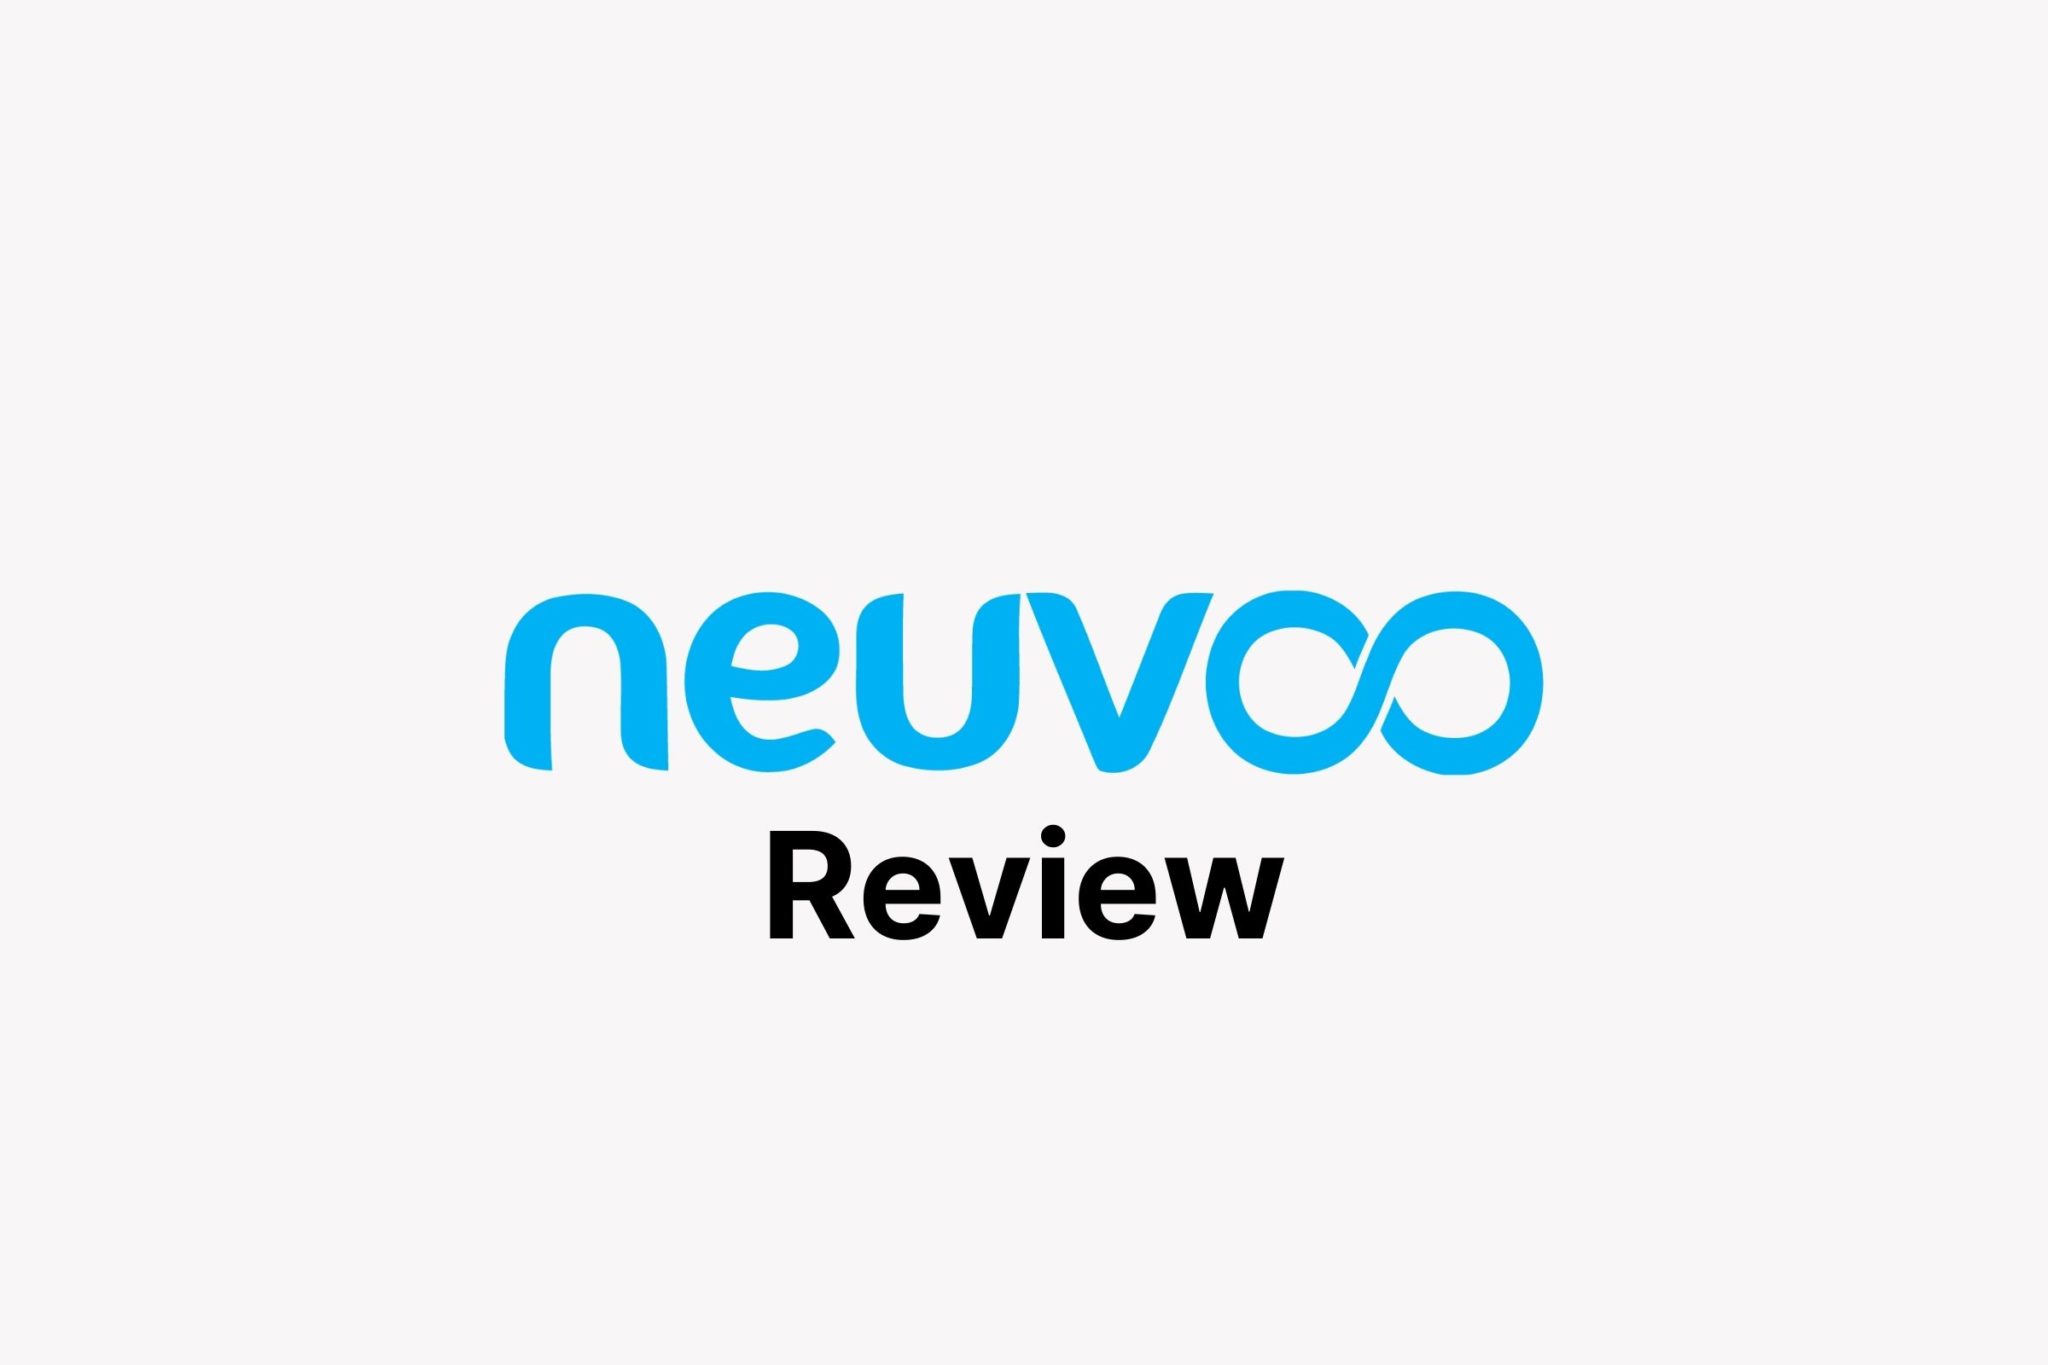 Reviews of Neuvoo